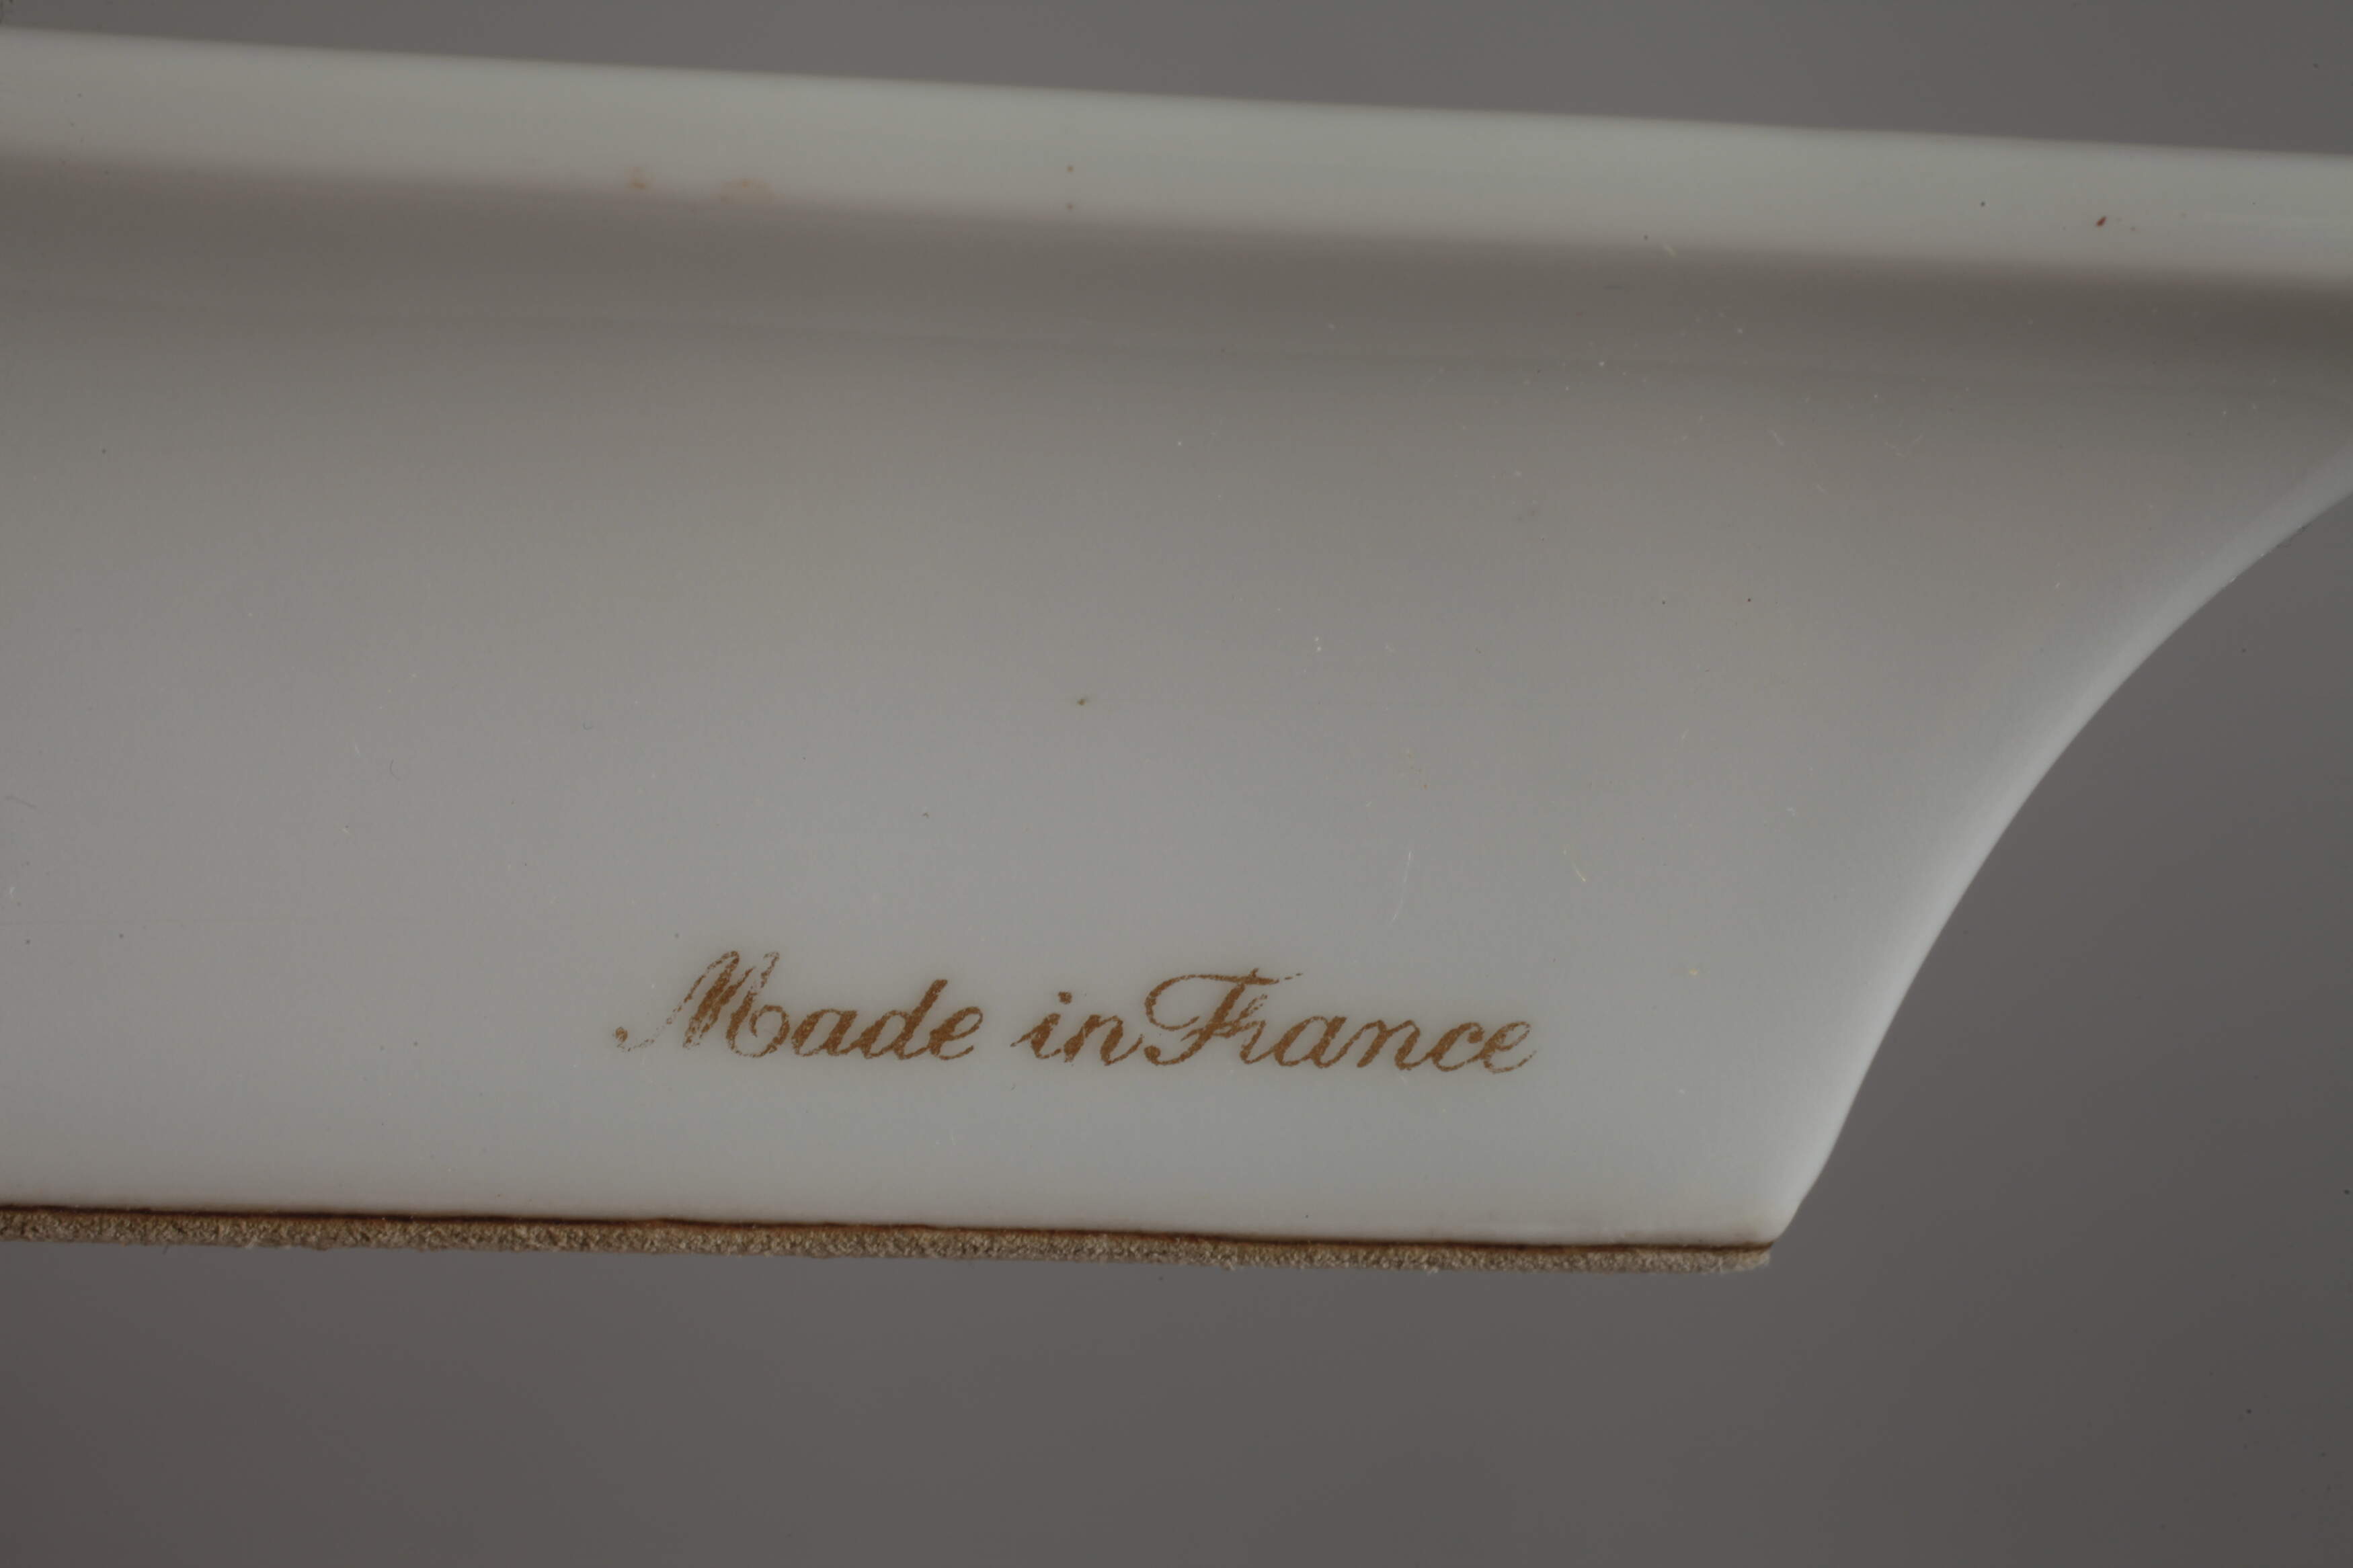 Hermès Paris ashtray - Image 4 of 4